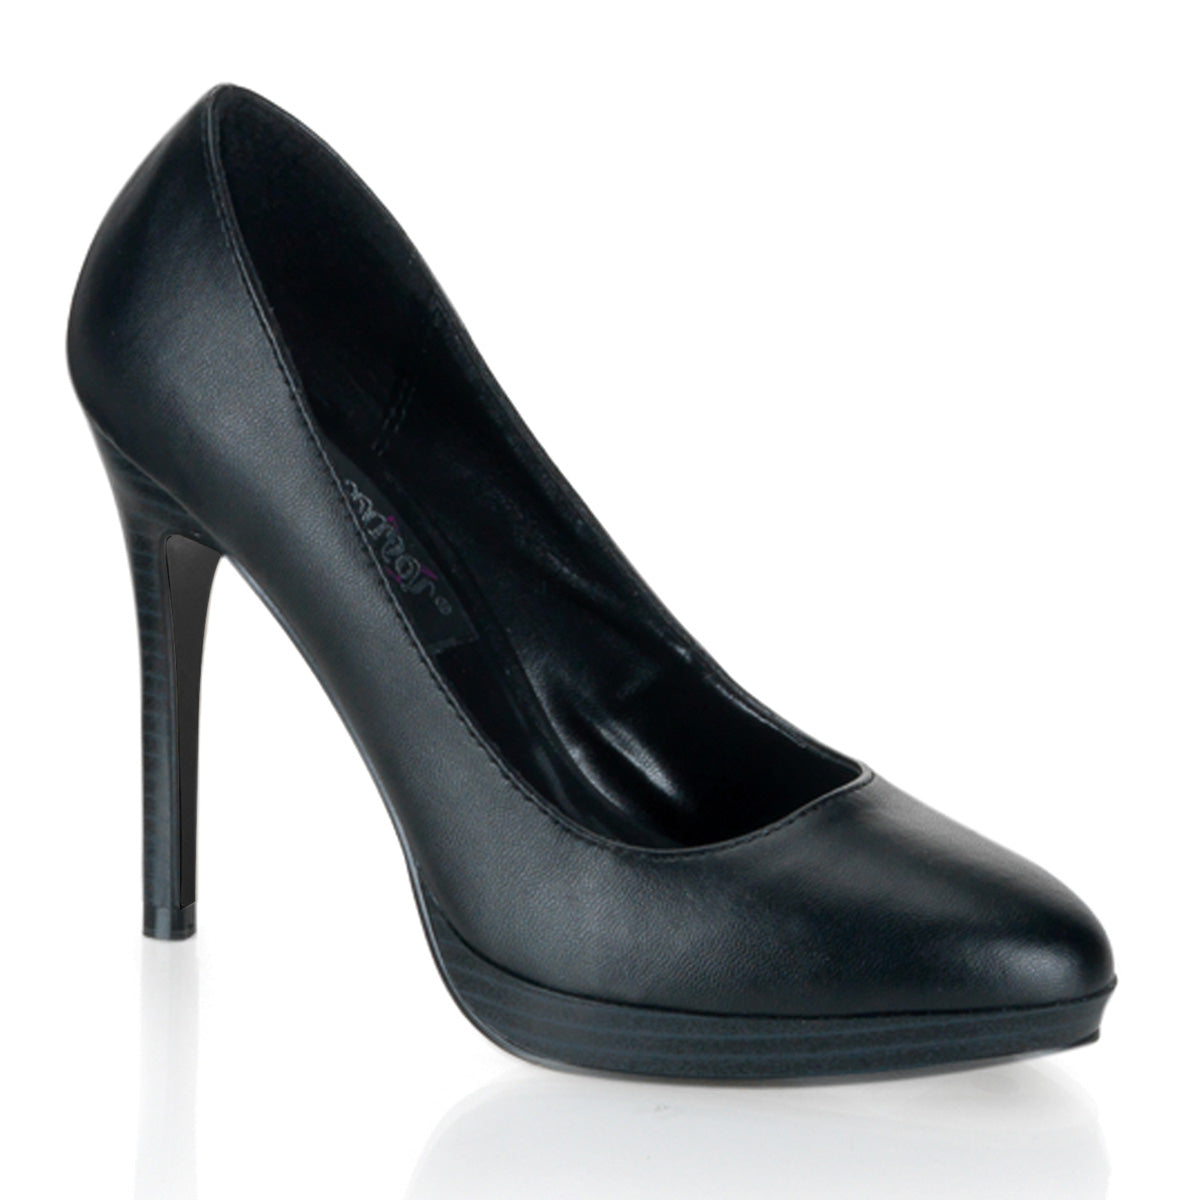 Bliss-30 Pin Up Couture Glamour 4 "каблука черная бурлескная обувь